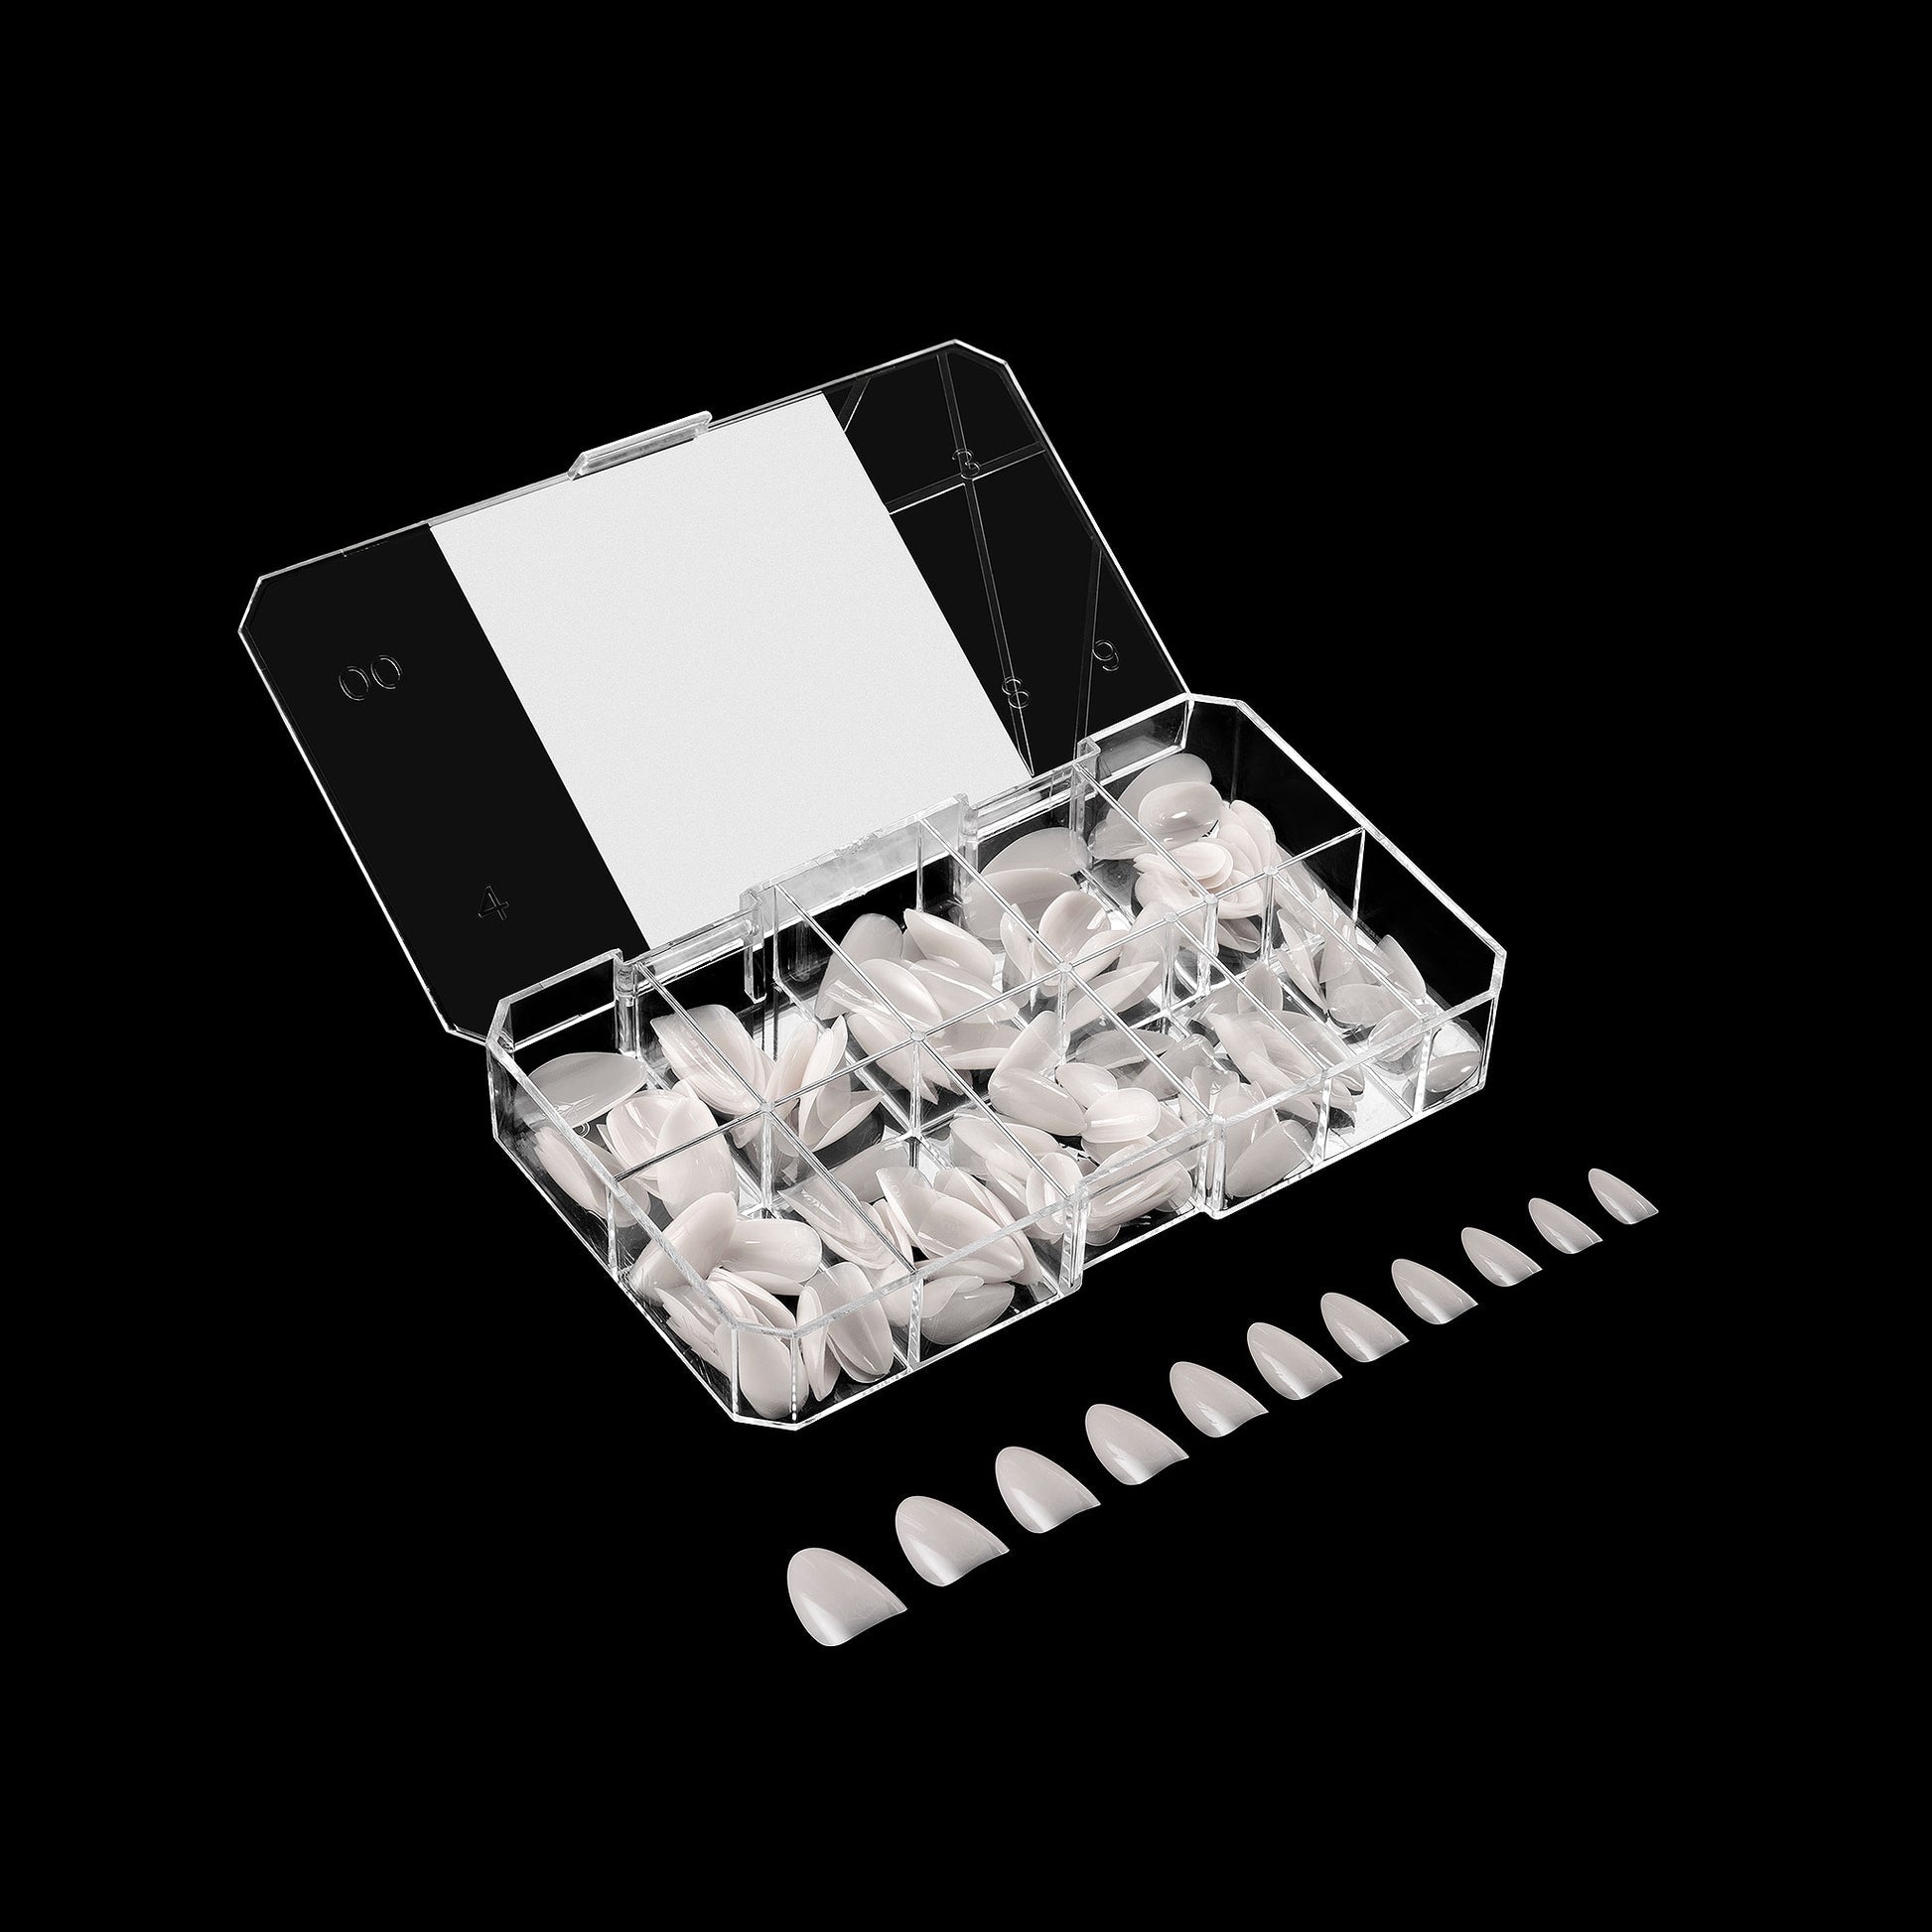 Aprés Gel-X - Neutrals Whitney Natural Square Short Box of Tips 150pcs -11 Sizes - Universal Nail Supplies